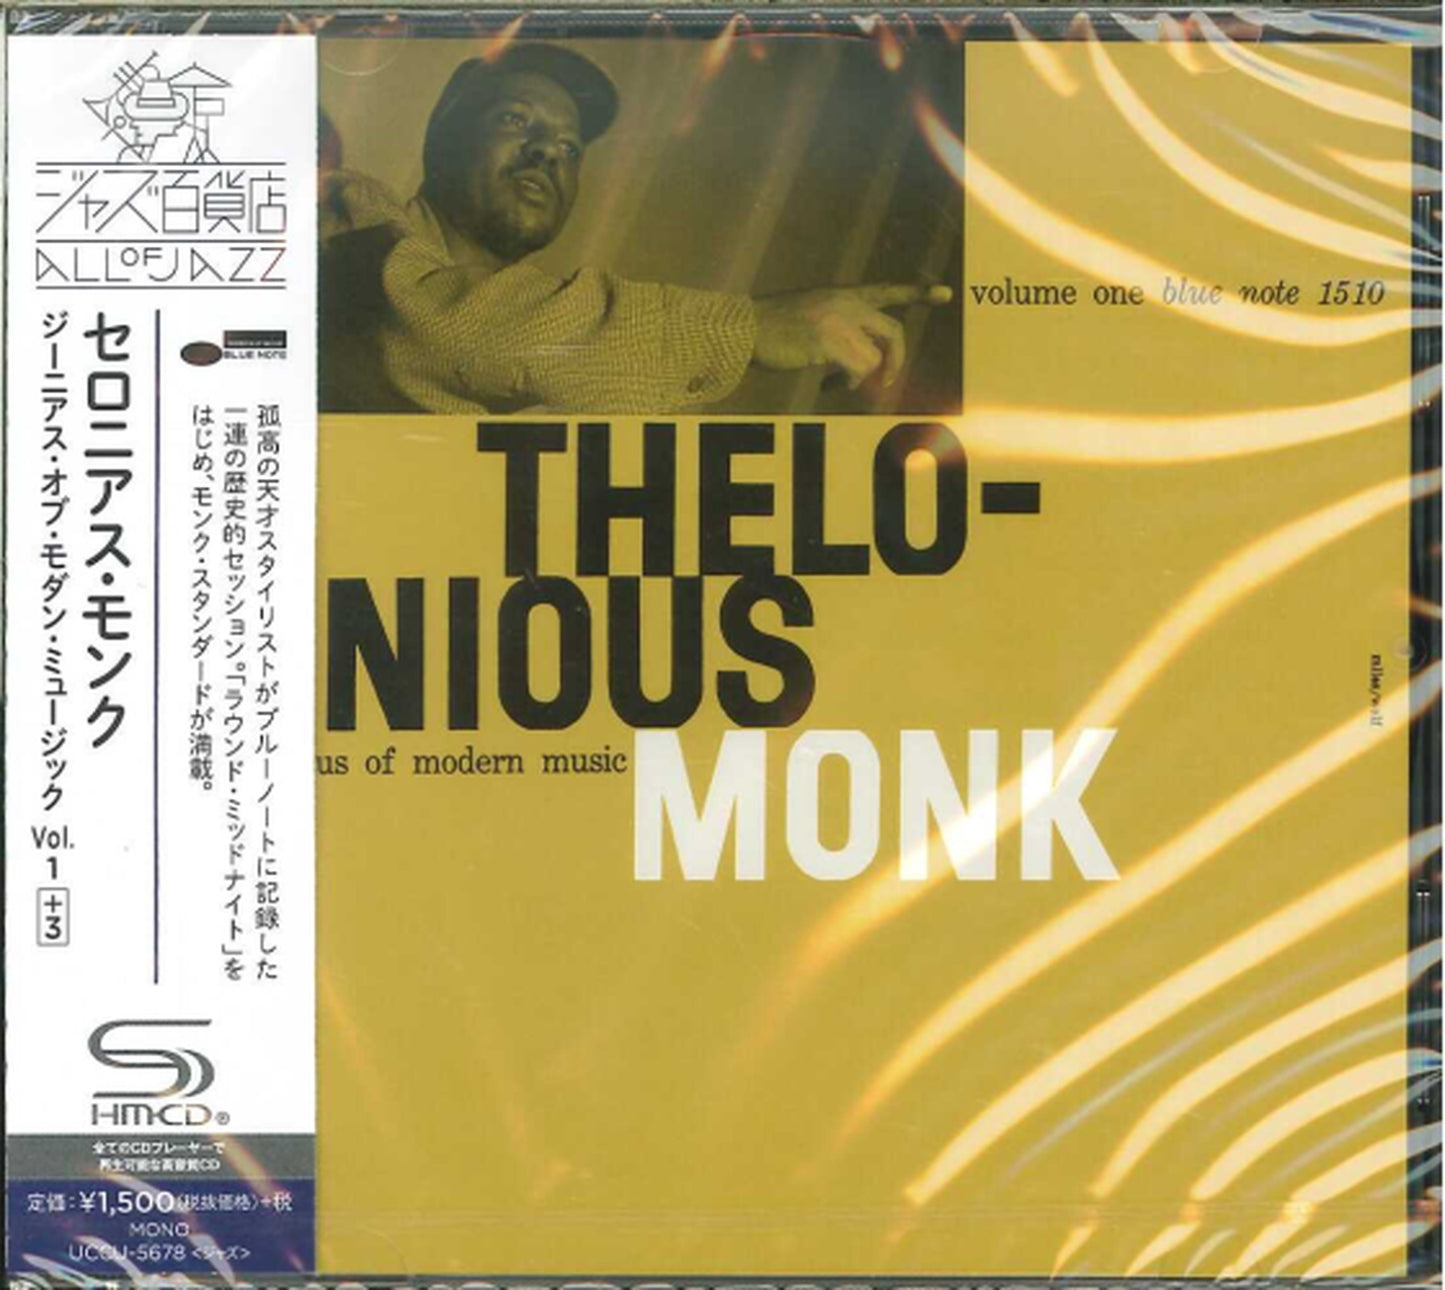 Thelonious Monk - Genius Of Modern Music Vol. 1 - Japan  SHM-CD